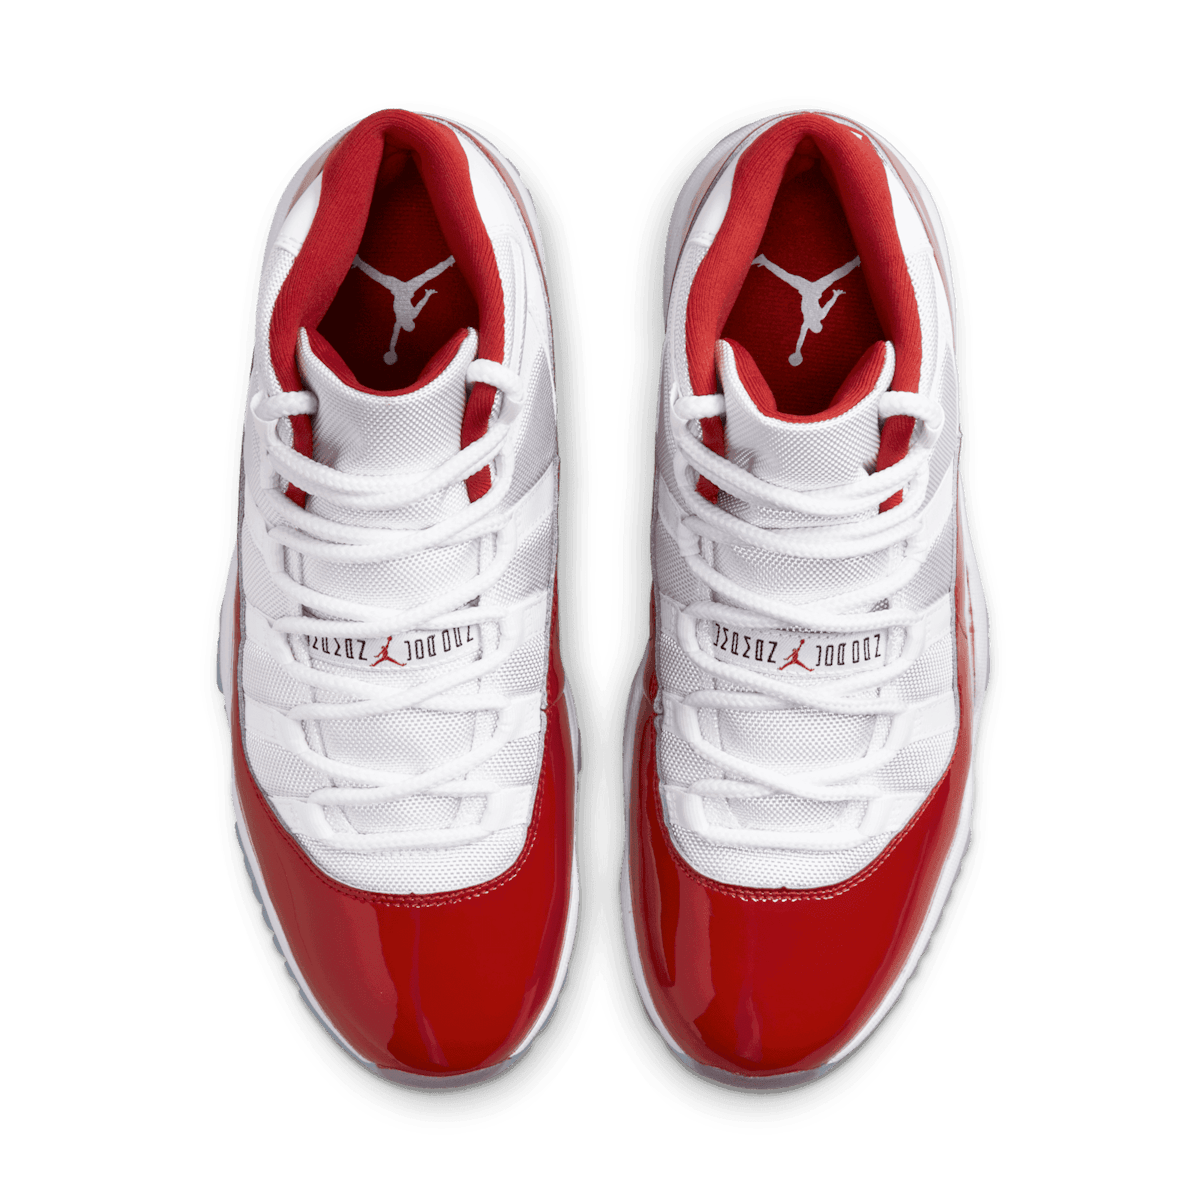 Air Jordan 11 Cherry Angle 1